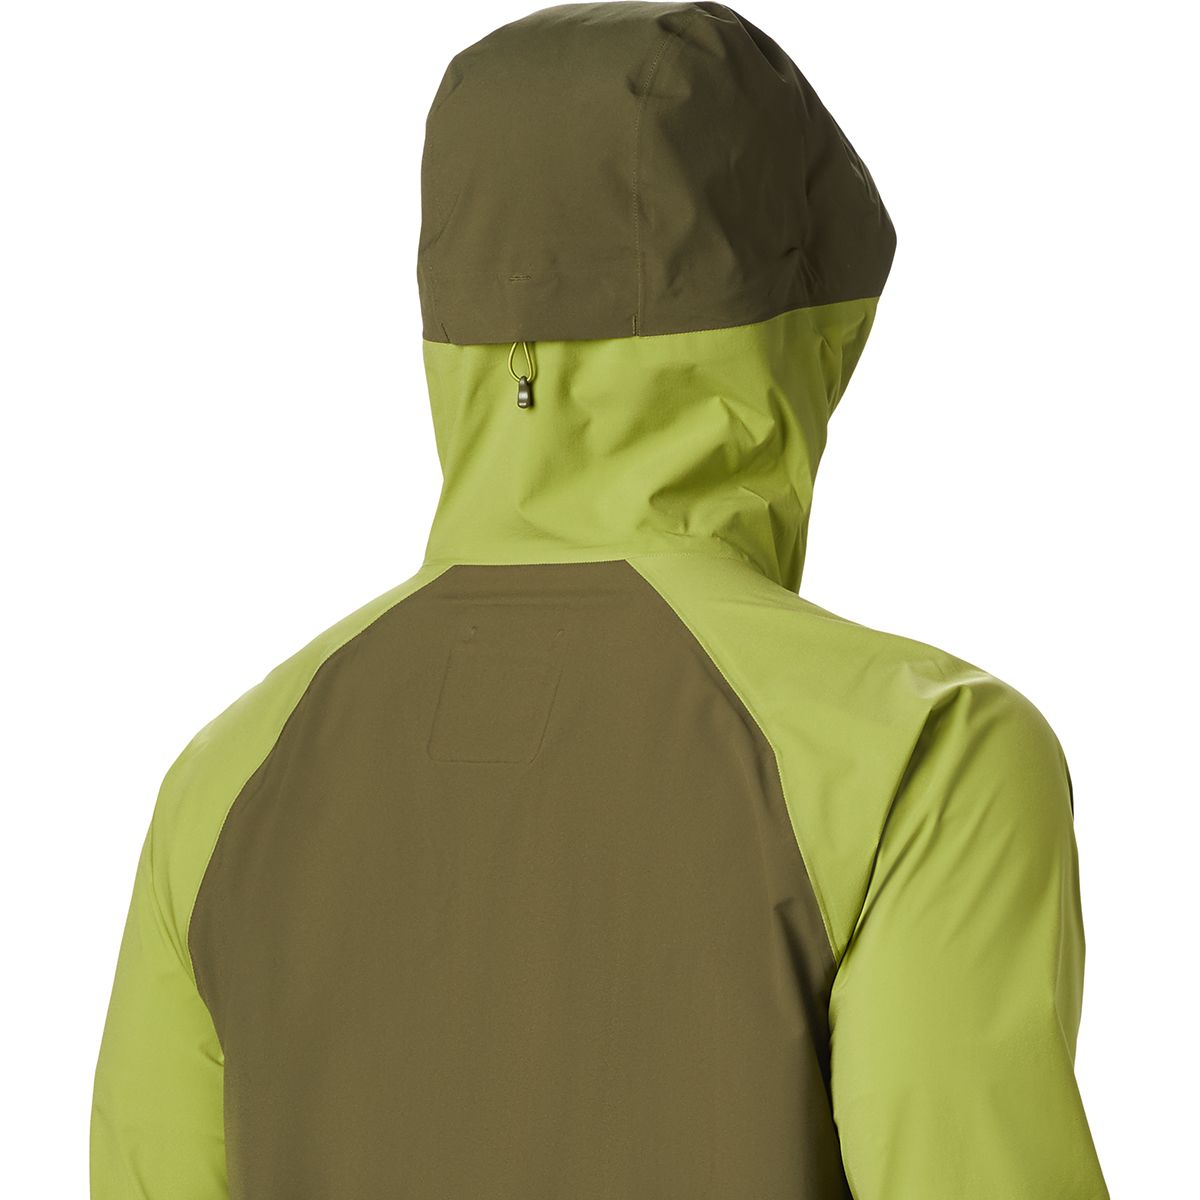 Mountain Hardwear Stretch Ozonic Jacket - Men's | Backcountry.com